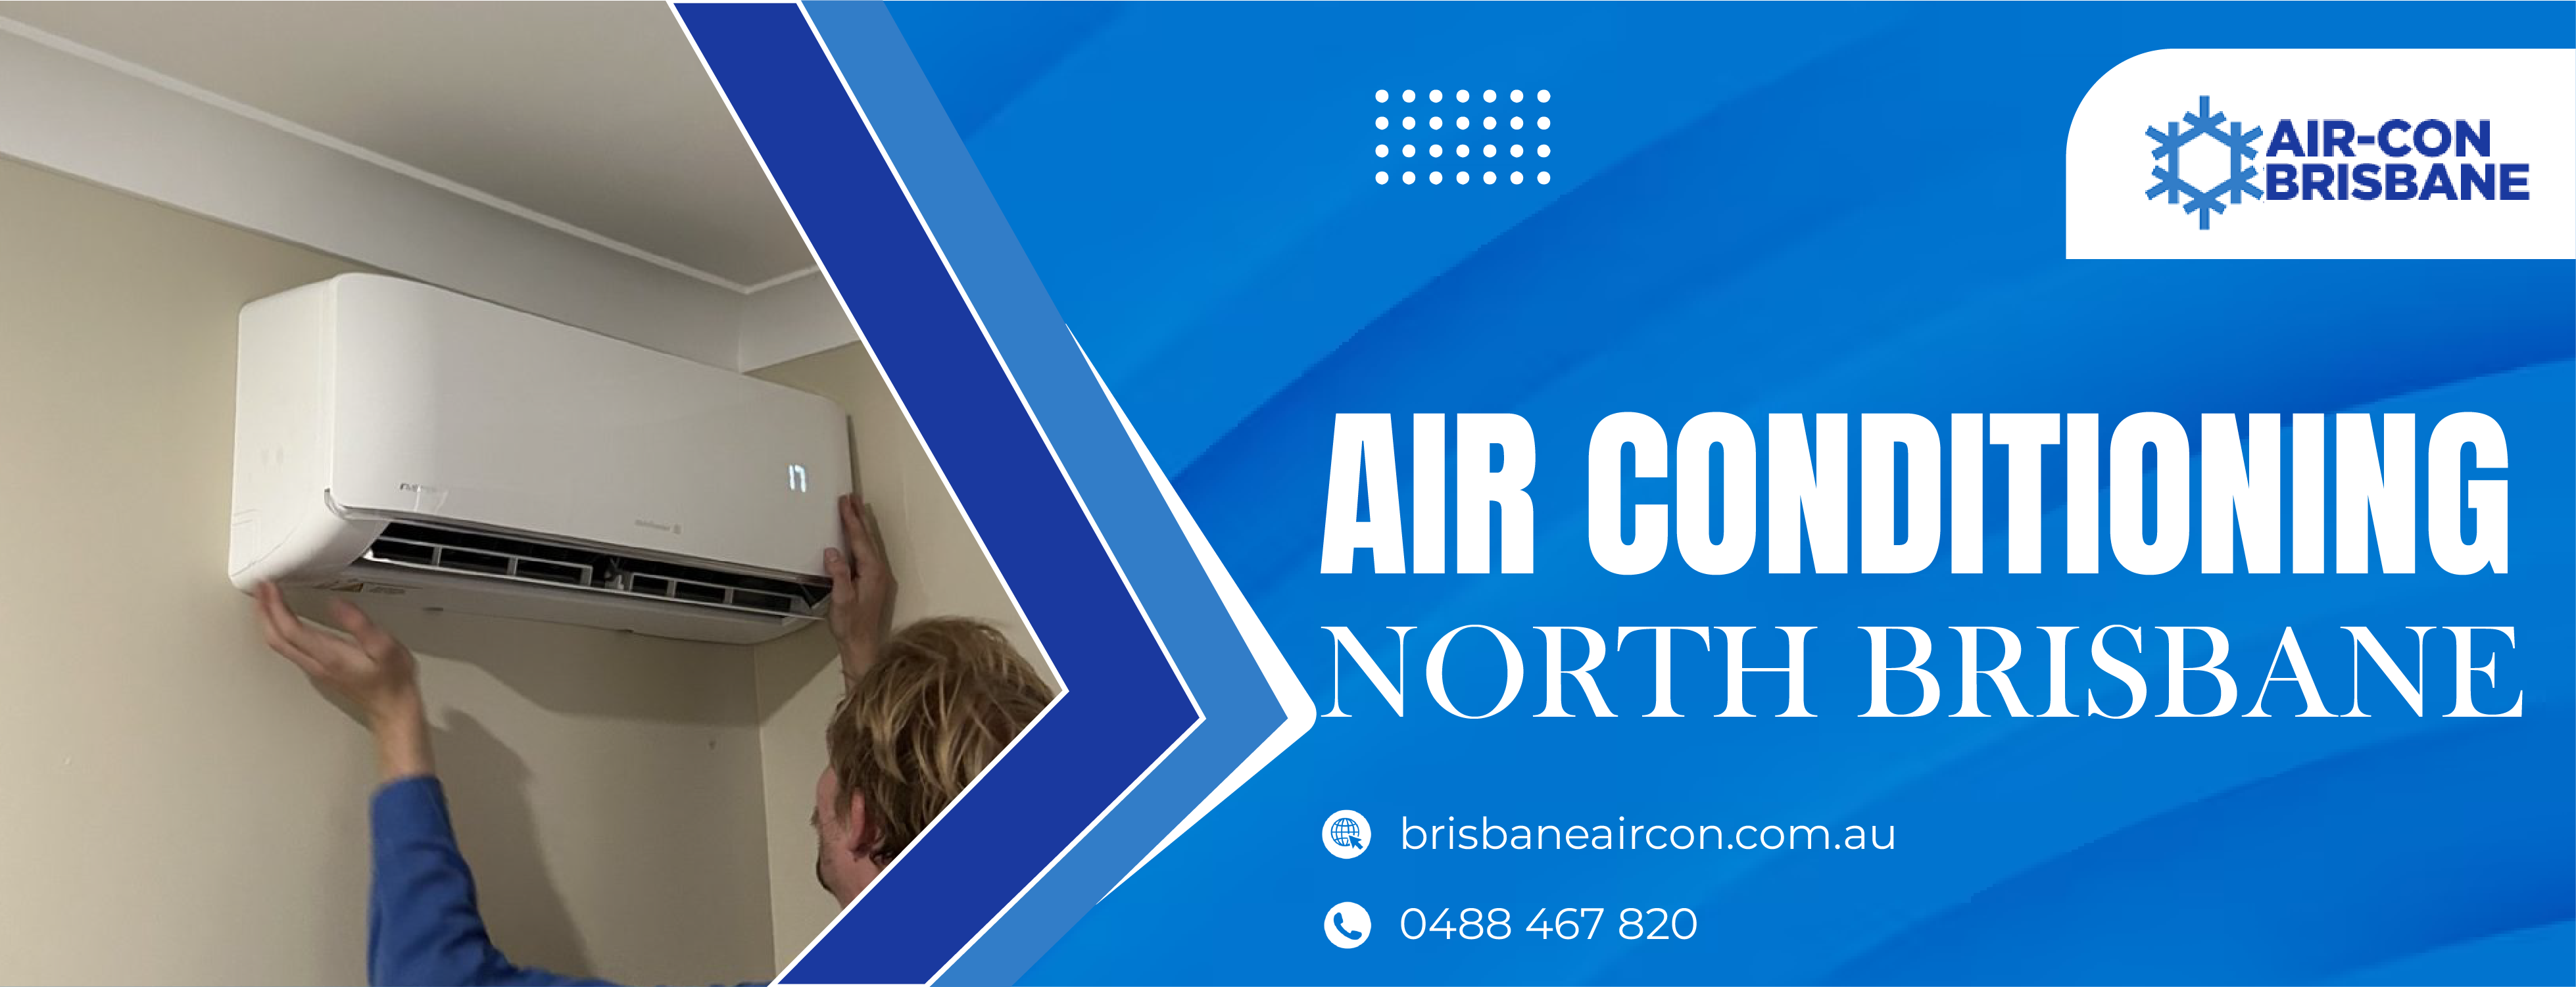 air conditioning north brisbane